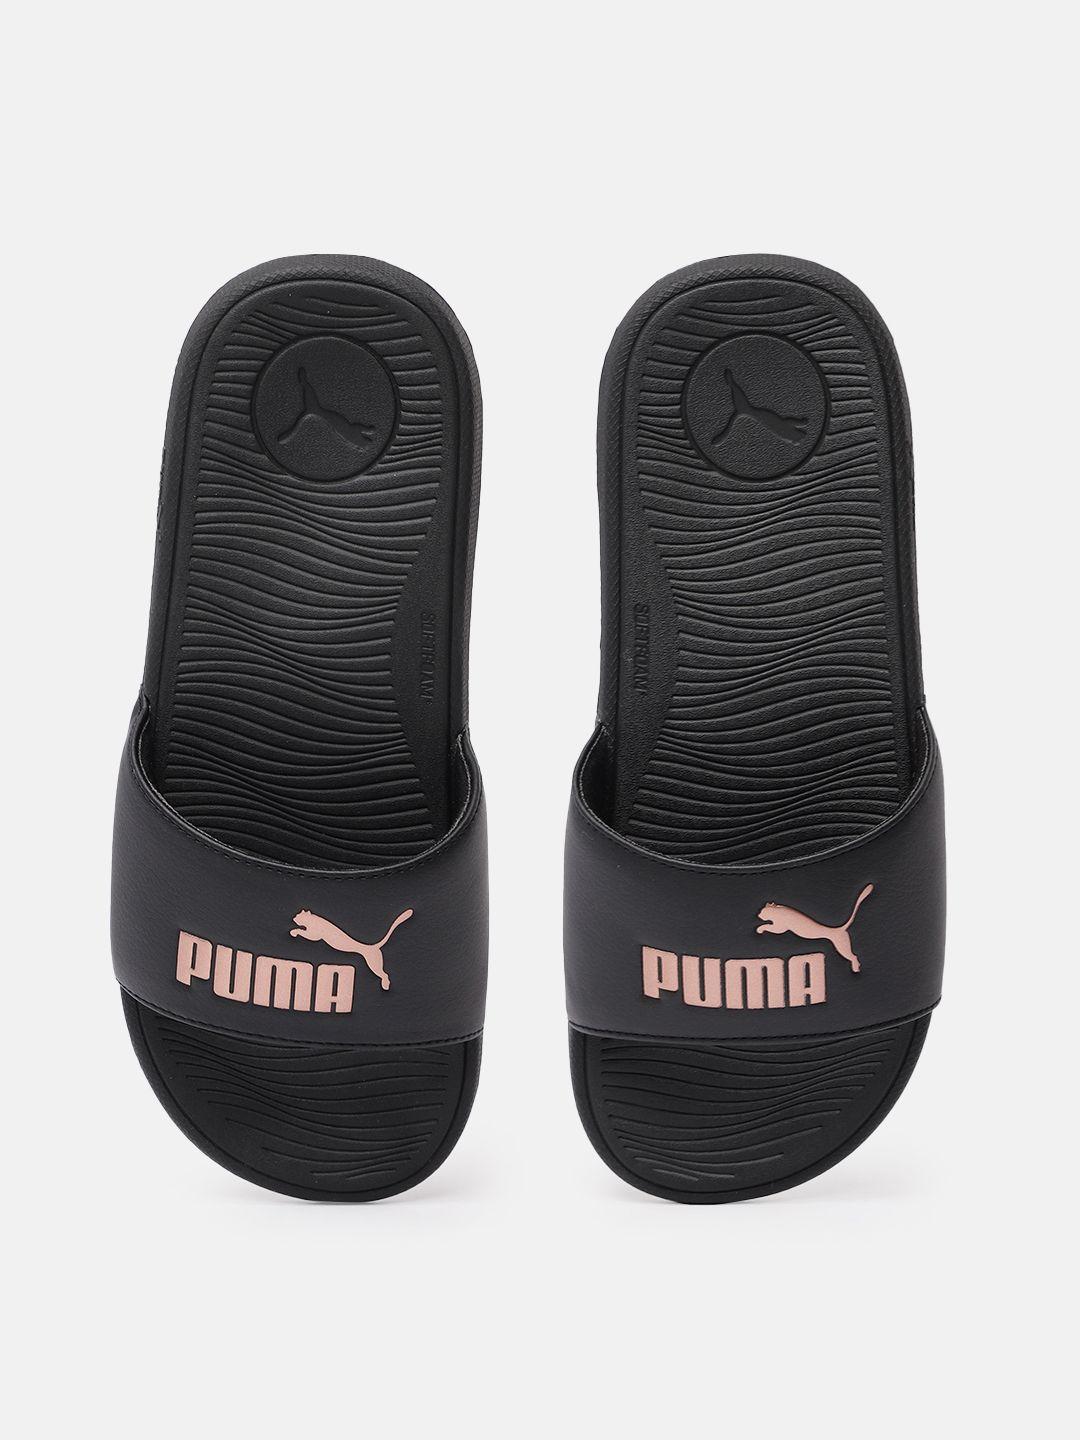 puma women brand logo printed sliders